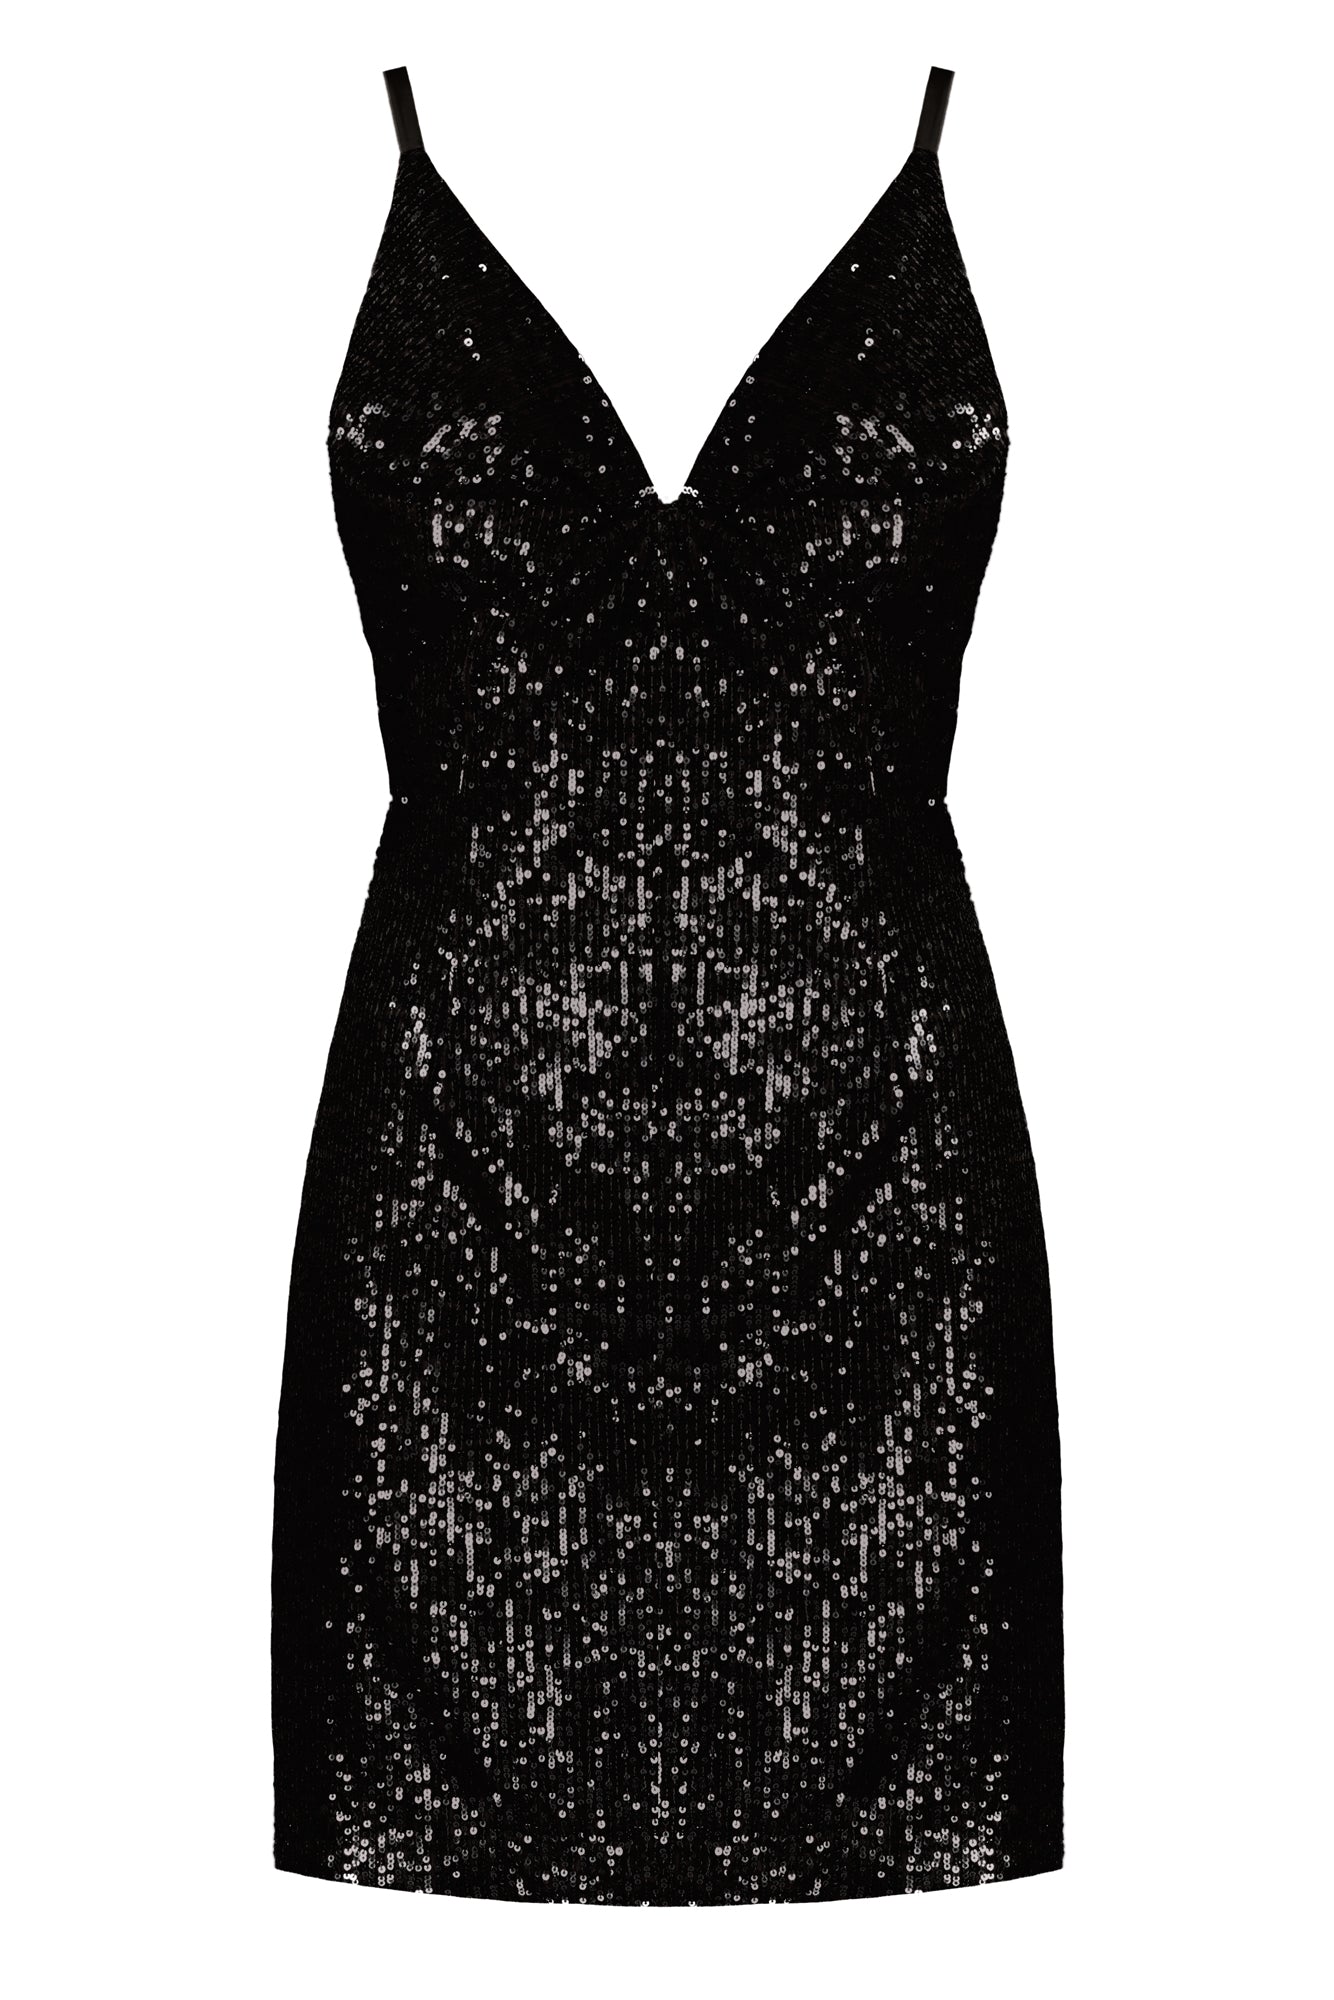 Undress Women's Buena Black Sequin Short Cocktail Dress